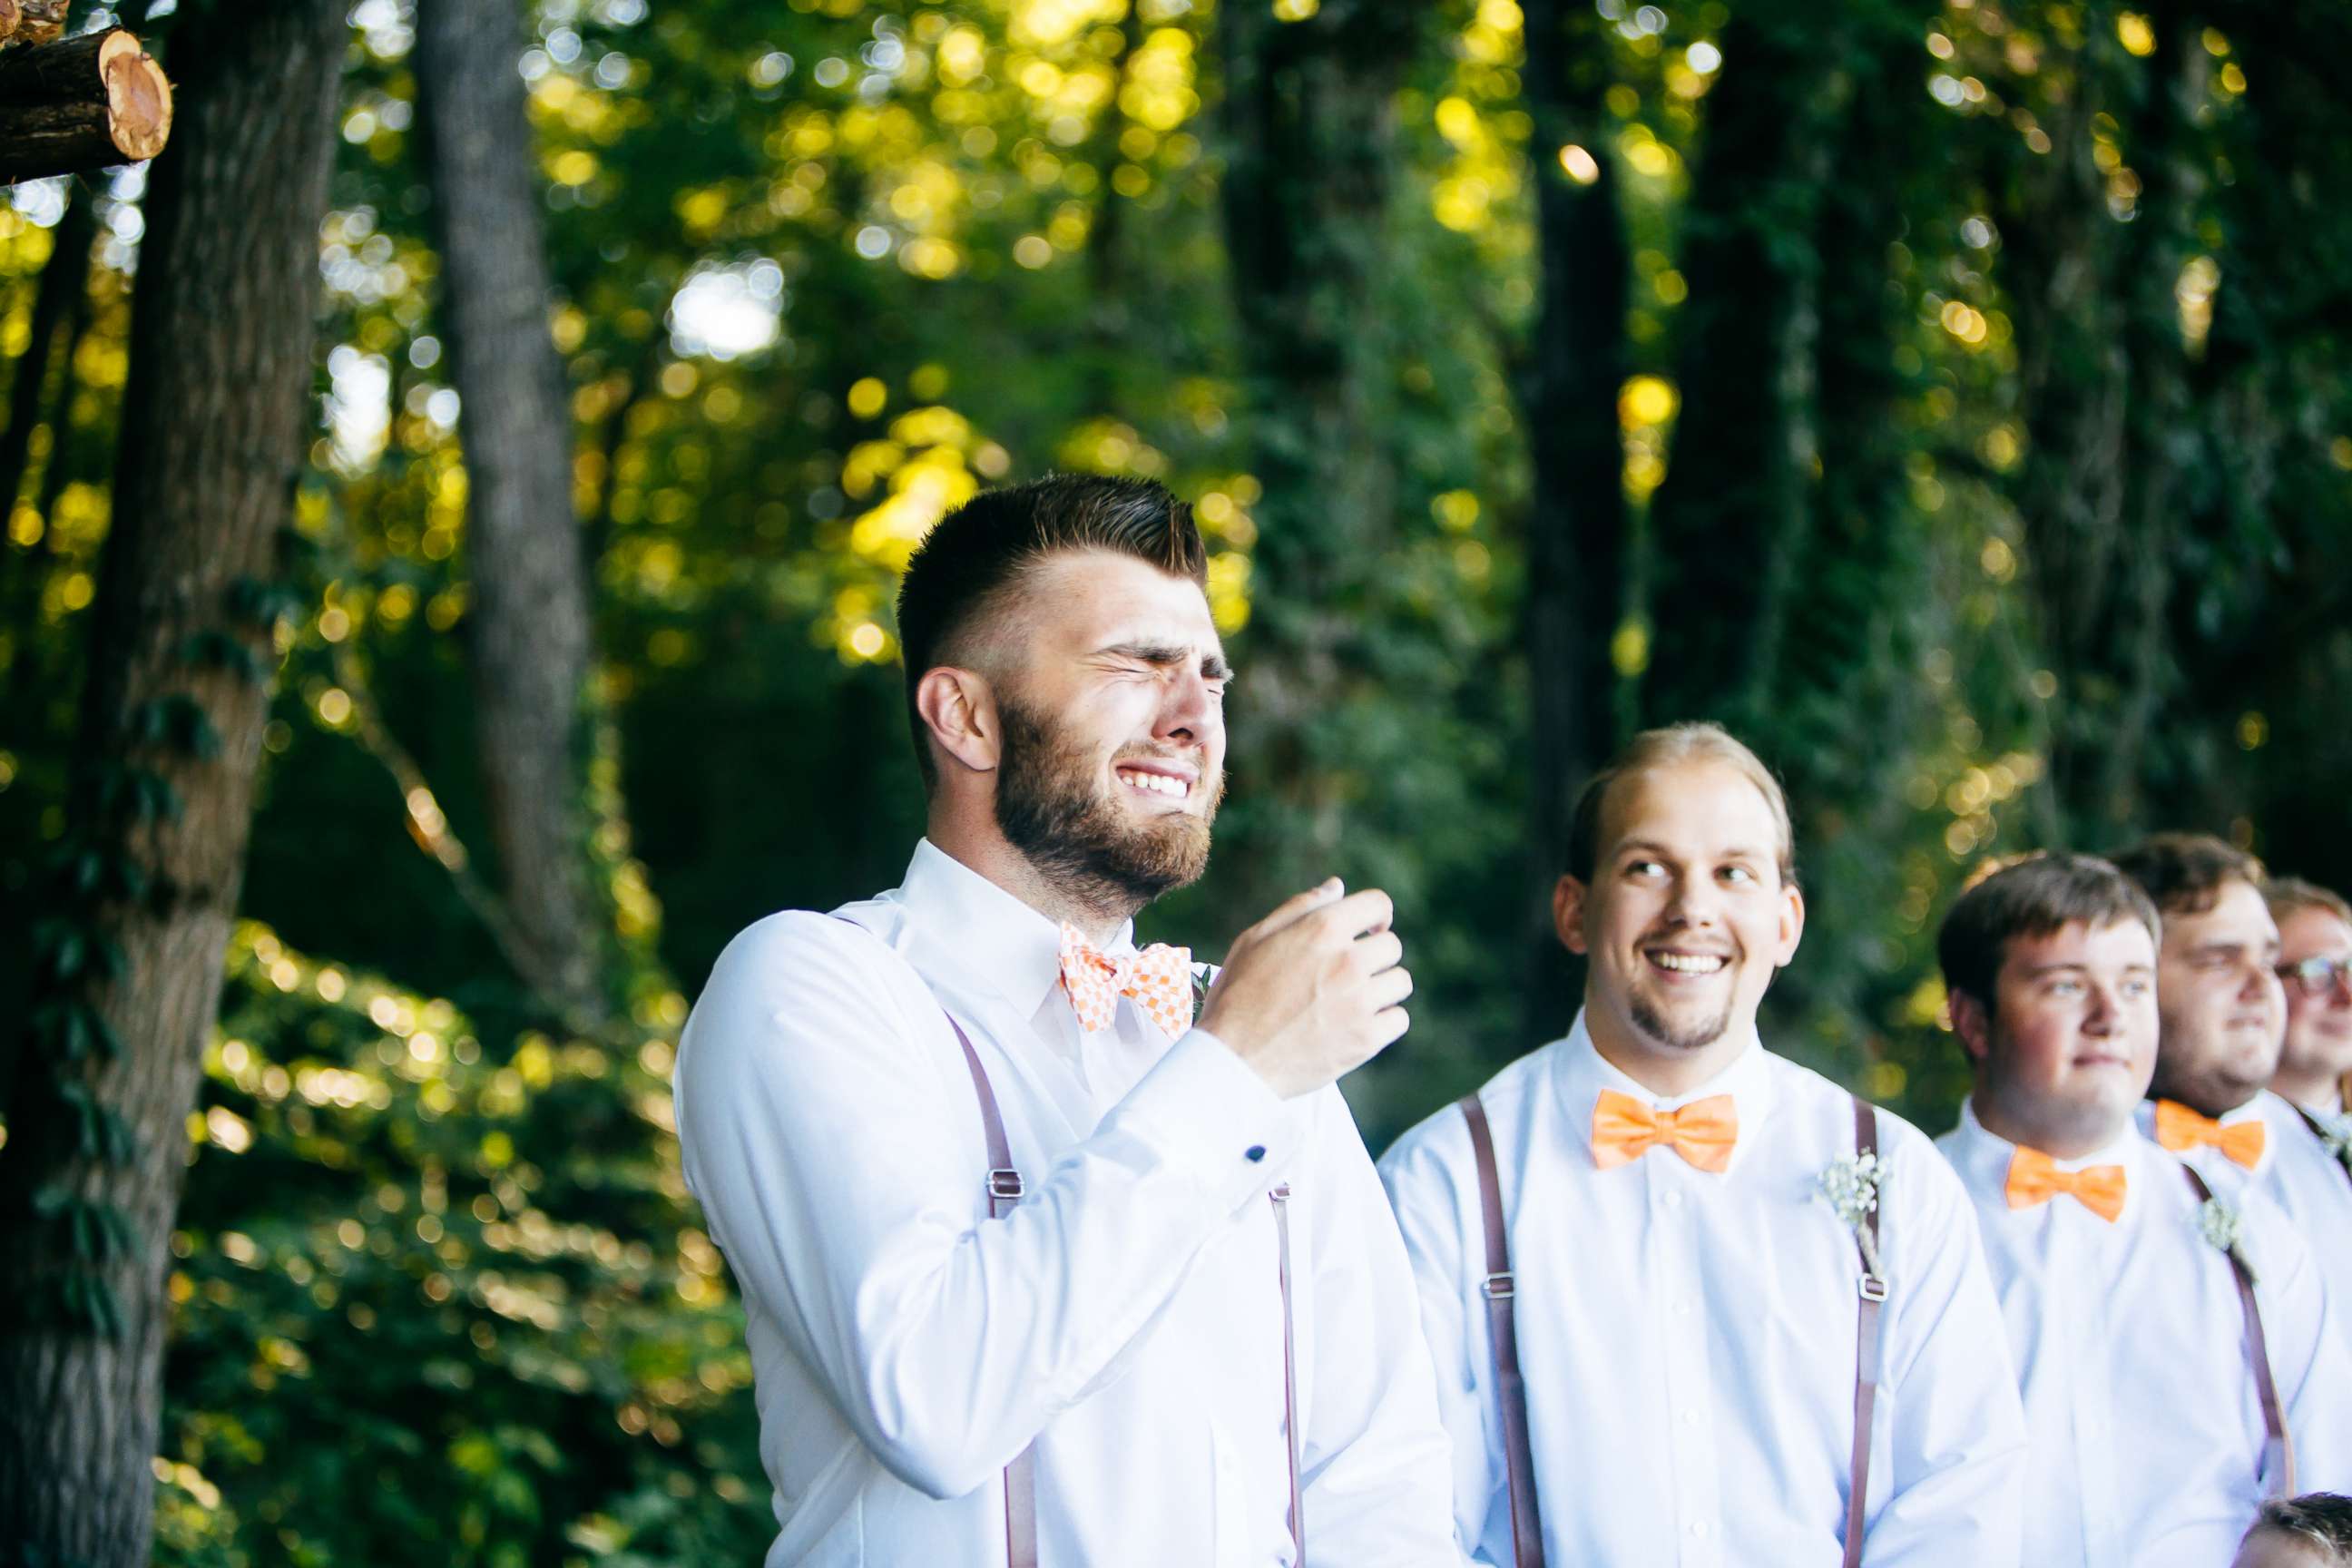 PHOTO: Micah Baker sheds tears of joy as his now wife, Bailey Baker, walks down the aisle at their wedding in Dandridge, Tenn.